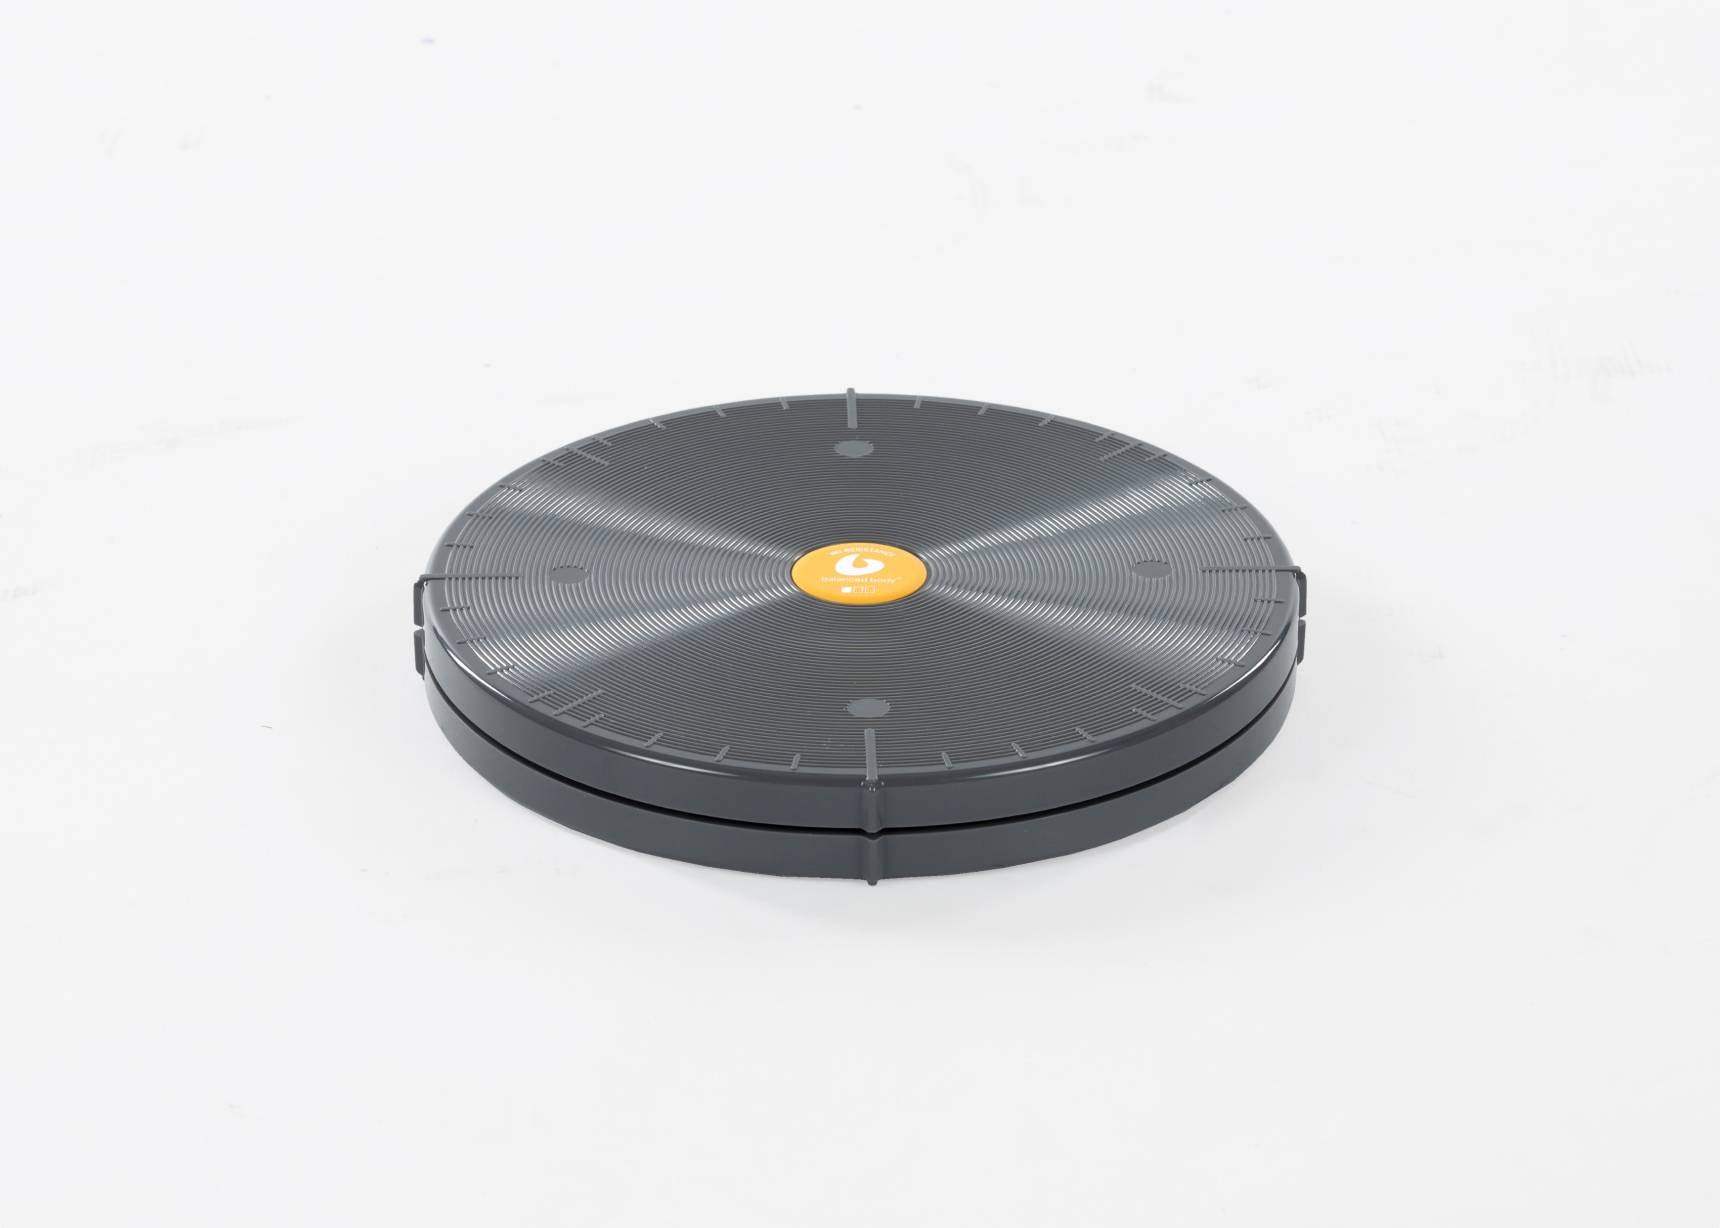 9-inch black precision rotator disc for balance. 